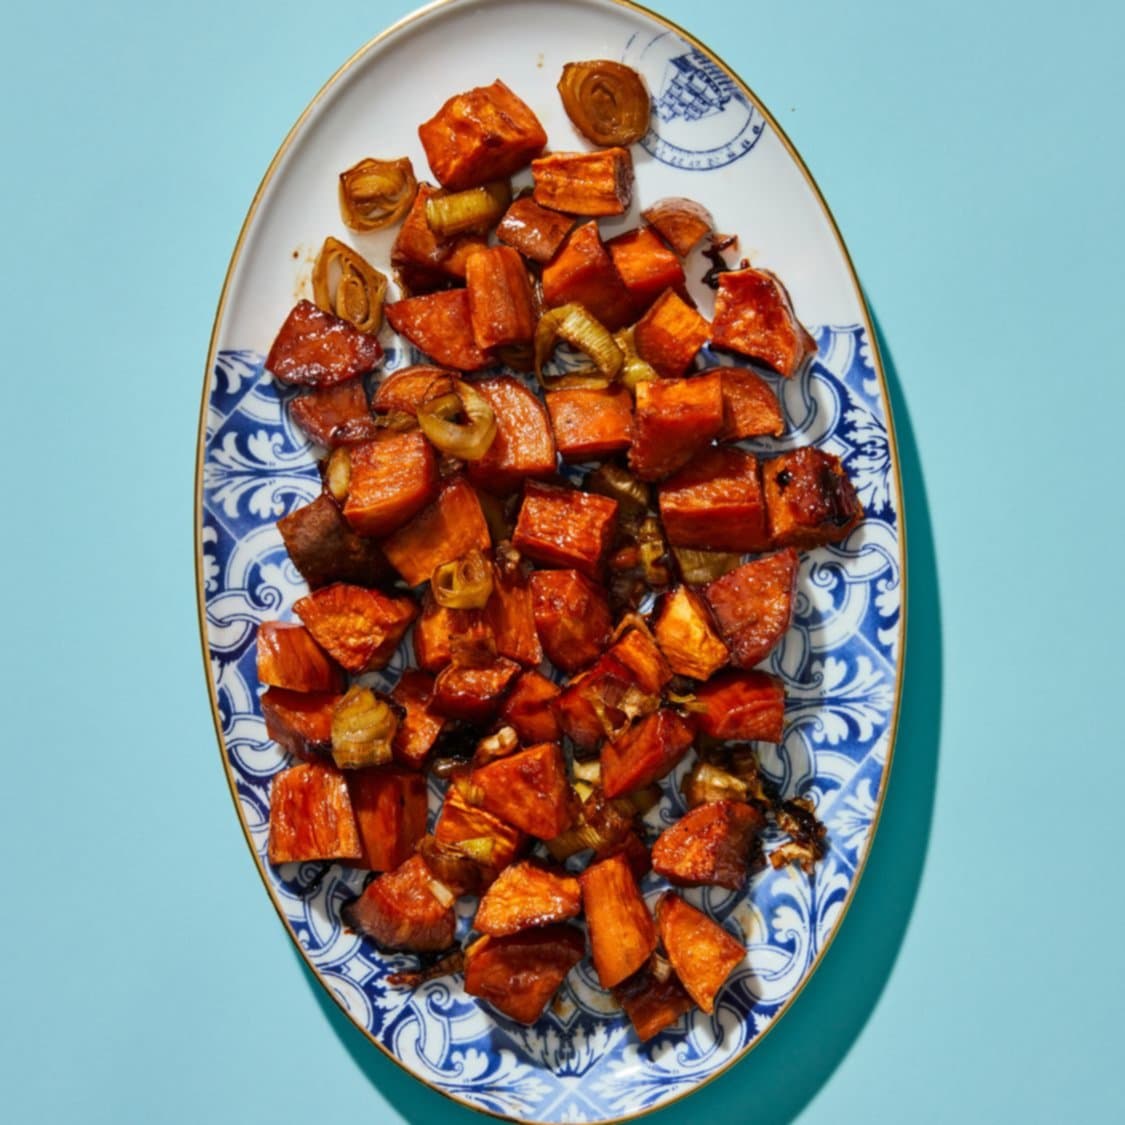 https://fleishigs.com/images/mobile-app/recipes/3001-list-silan-roasted-sweetpotatoes-and-leeks.jpg